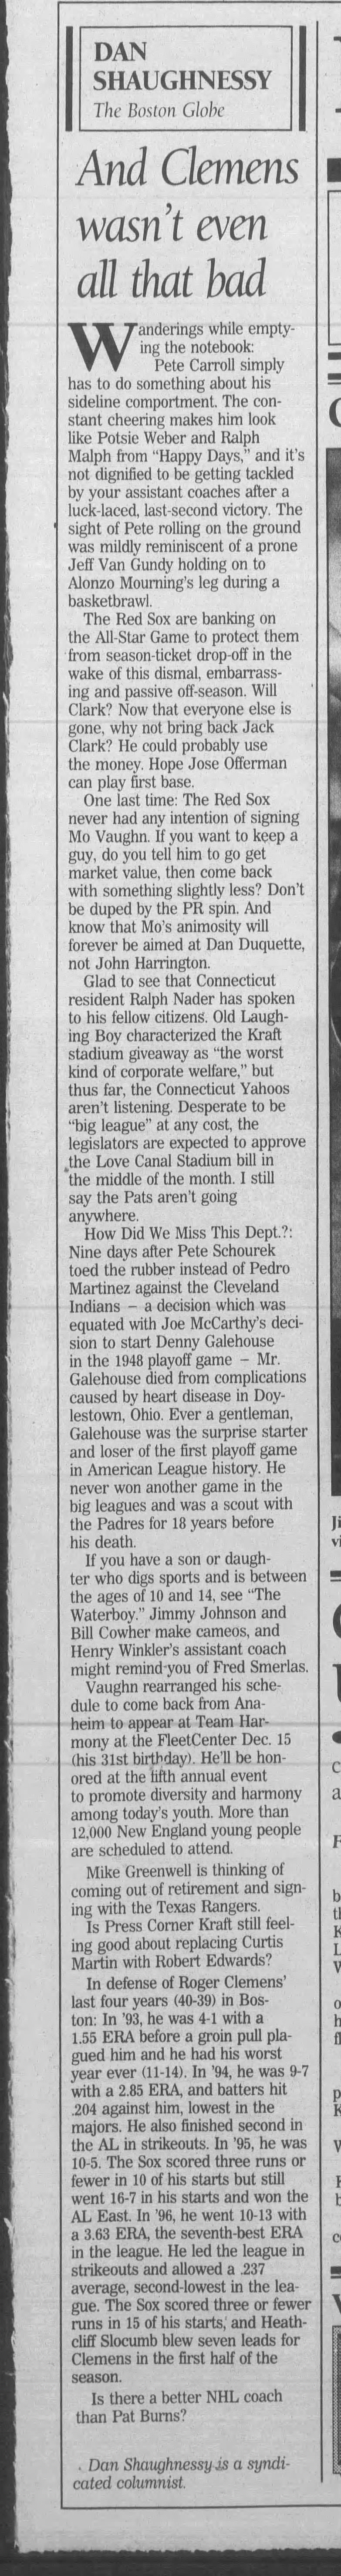 Galehouse, December 5, 1998